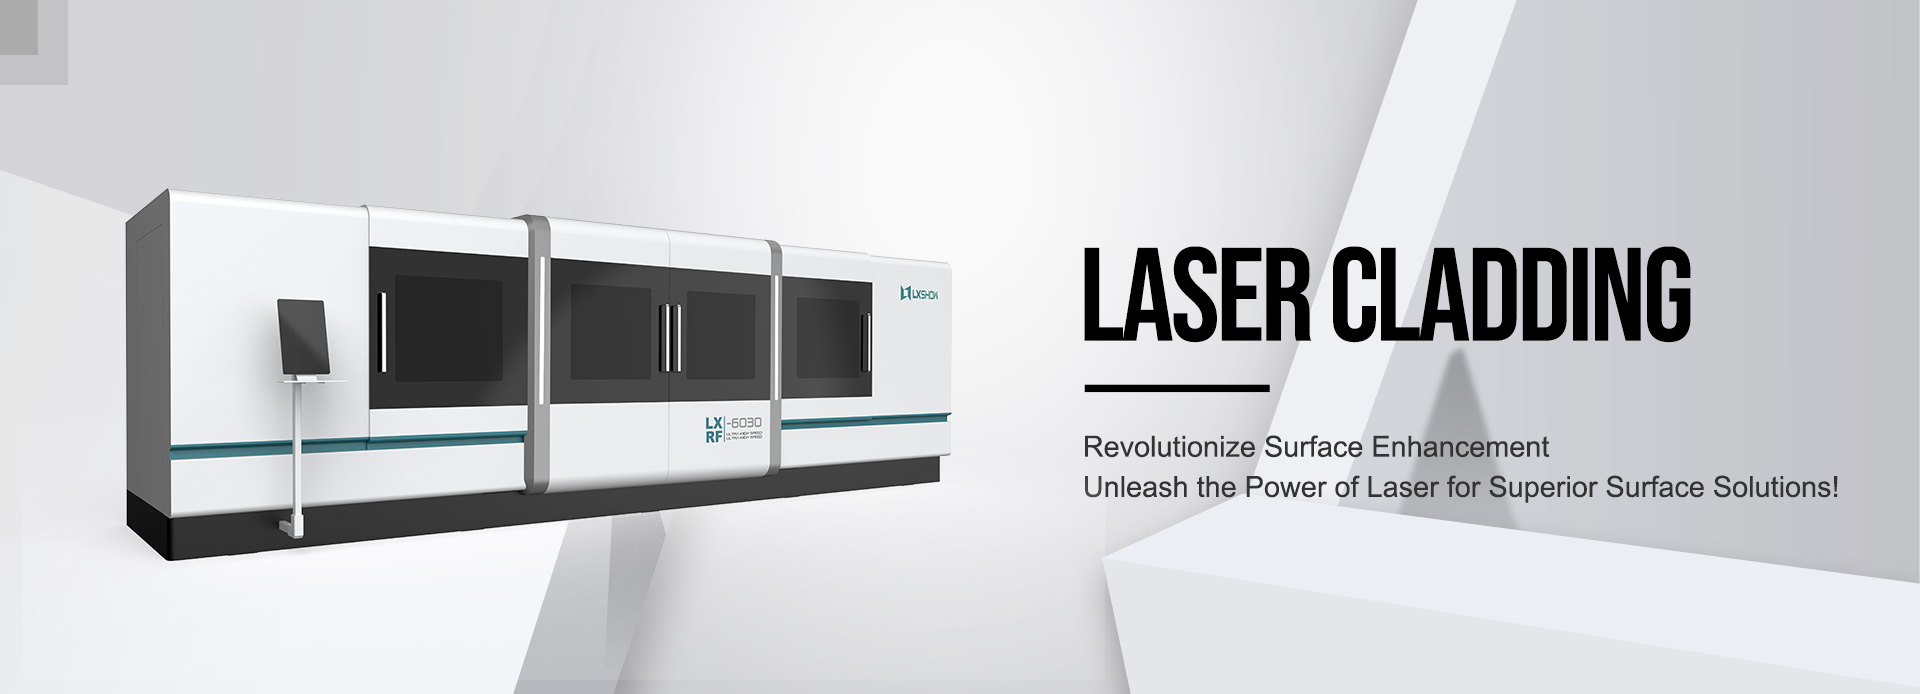 LXRF-6030 Hot Selling Single Achs Surround Laser Cladding Machine fir Metal